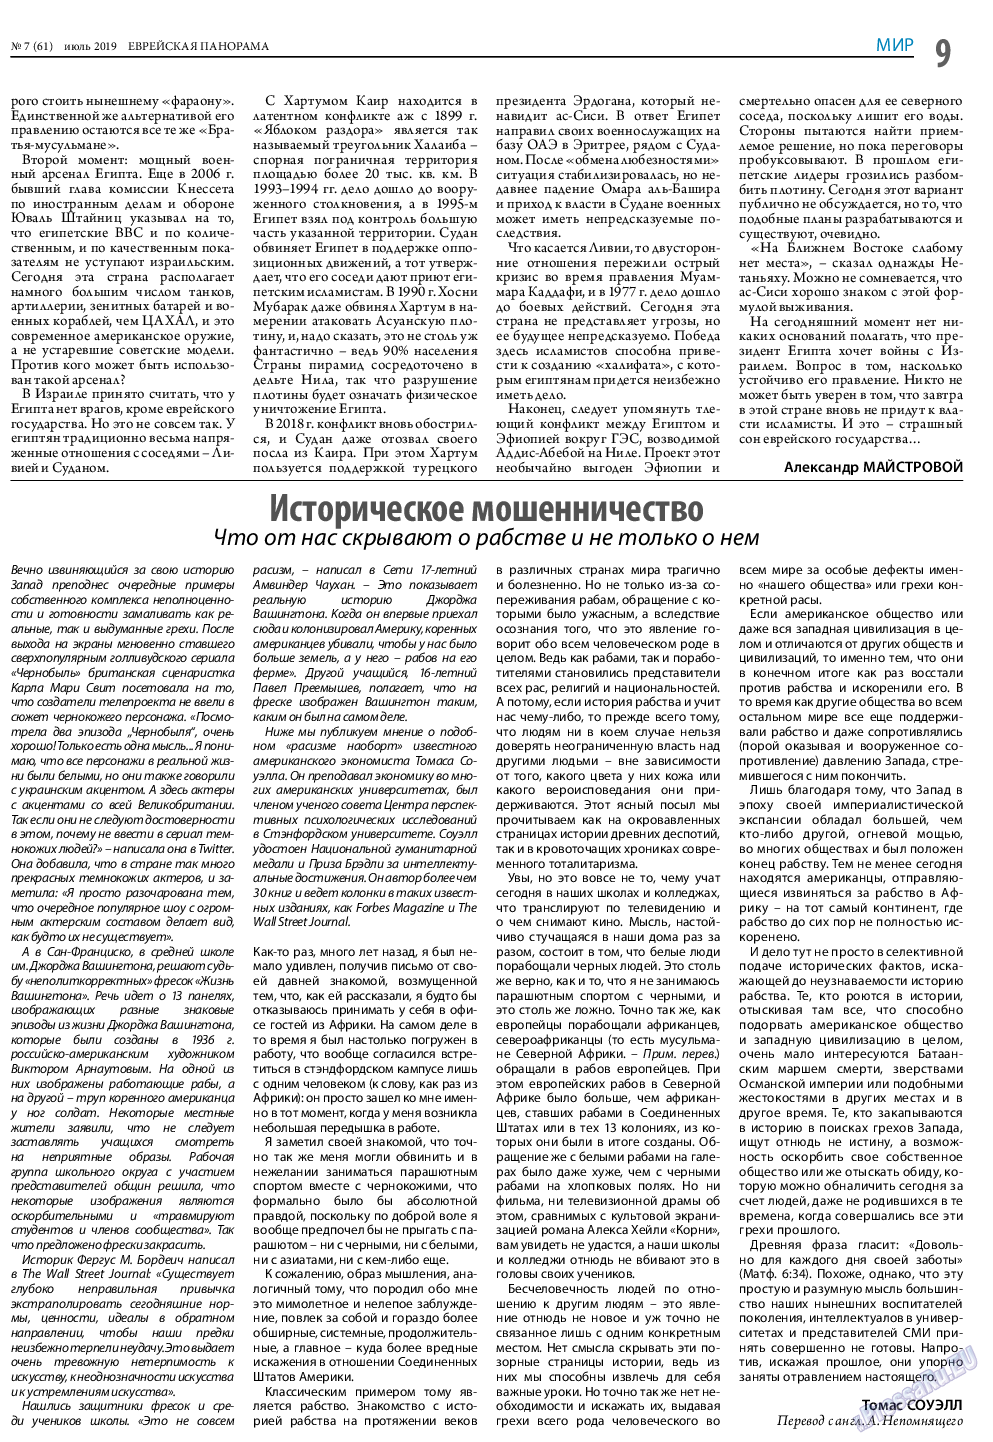 Еврейская панорама, газета. 2019 №7 стр.9